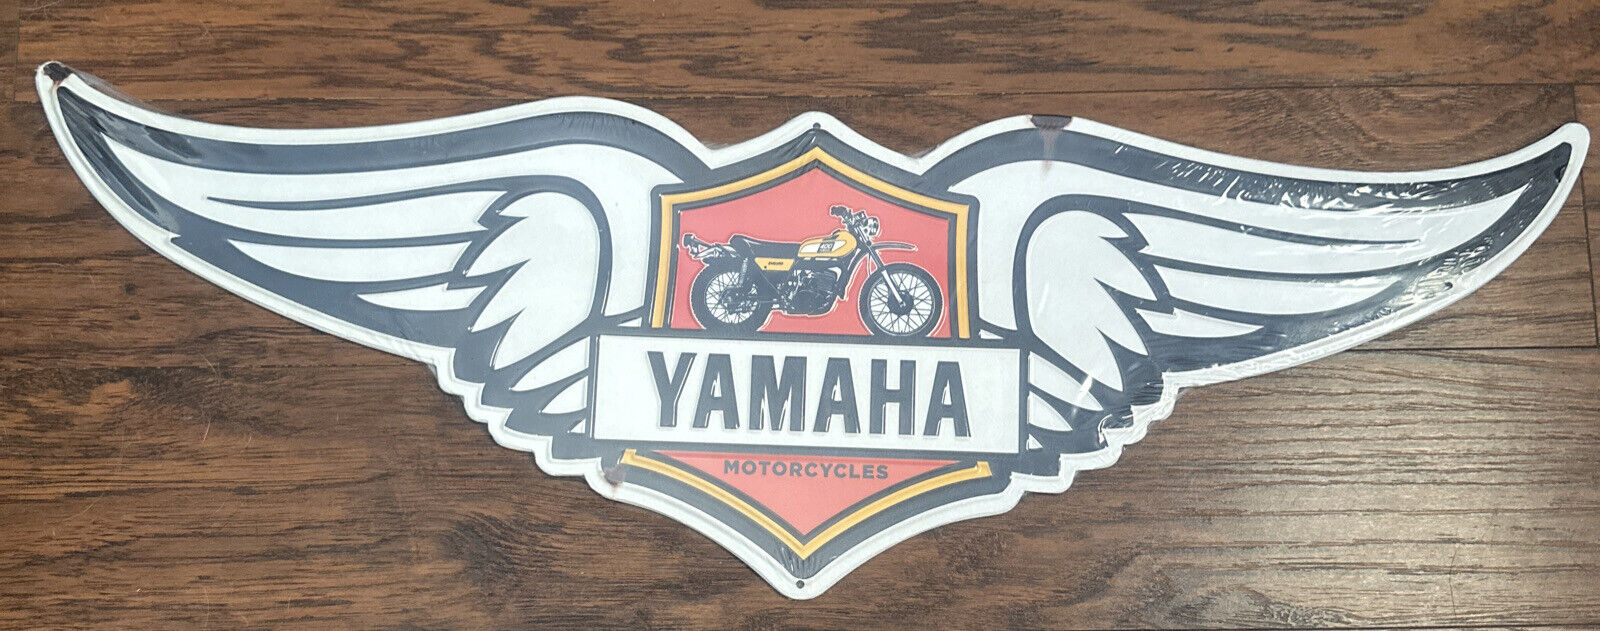 Yamaha Motorcycle Metal Sign Enduro 400 Dirt Bike Parts Man Cave Sign